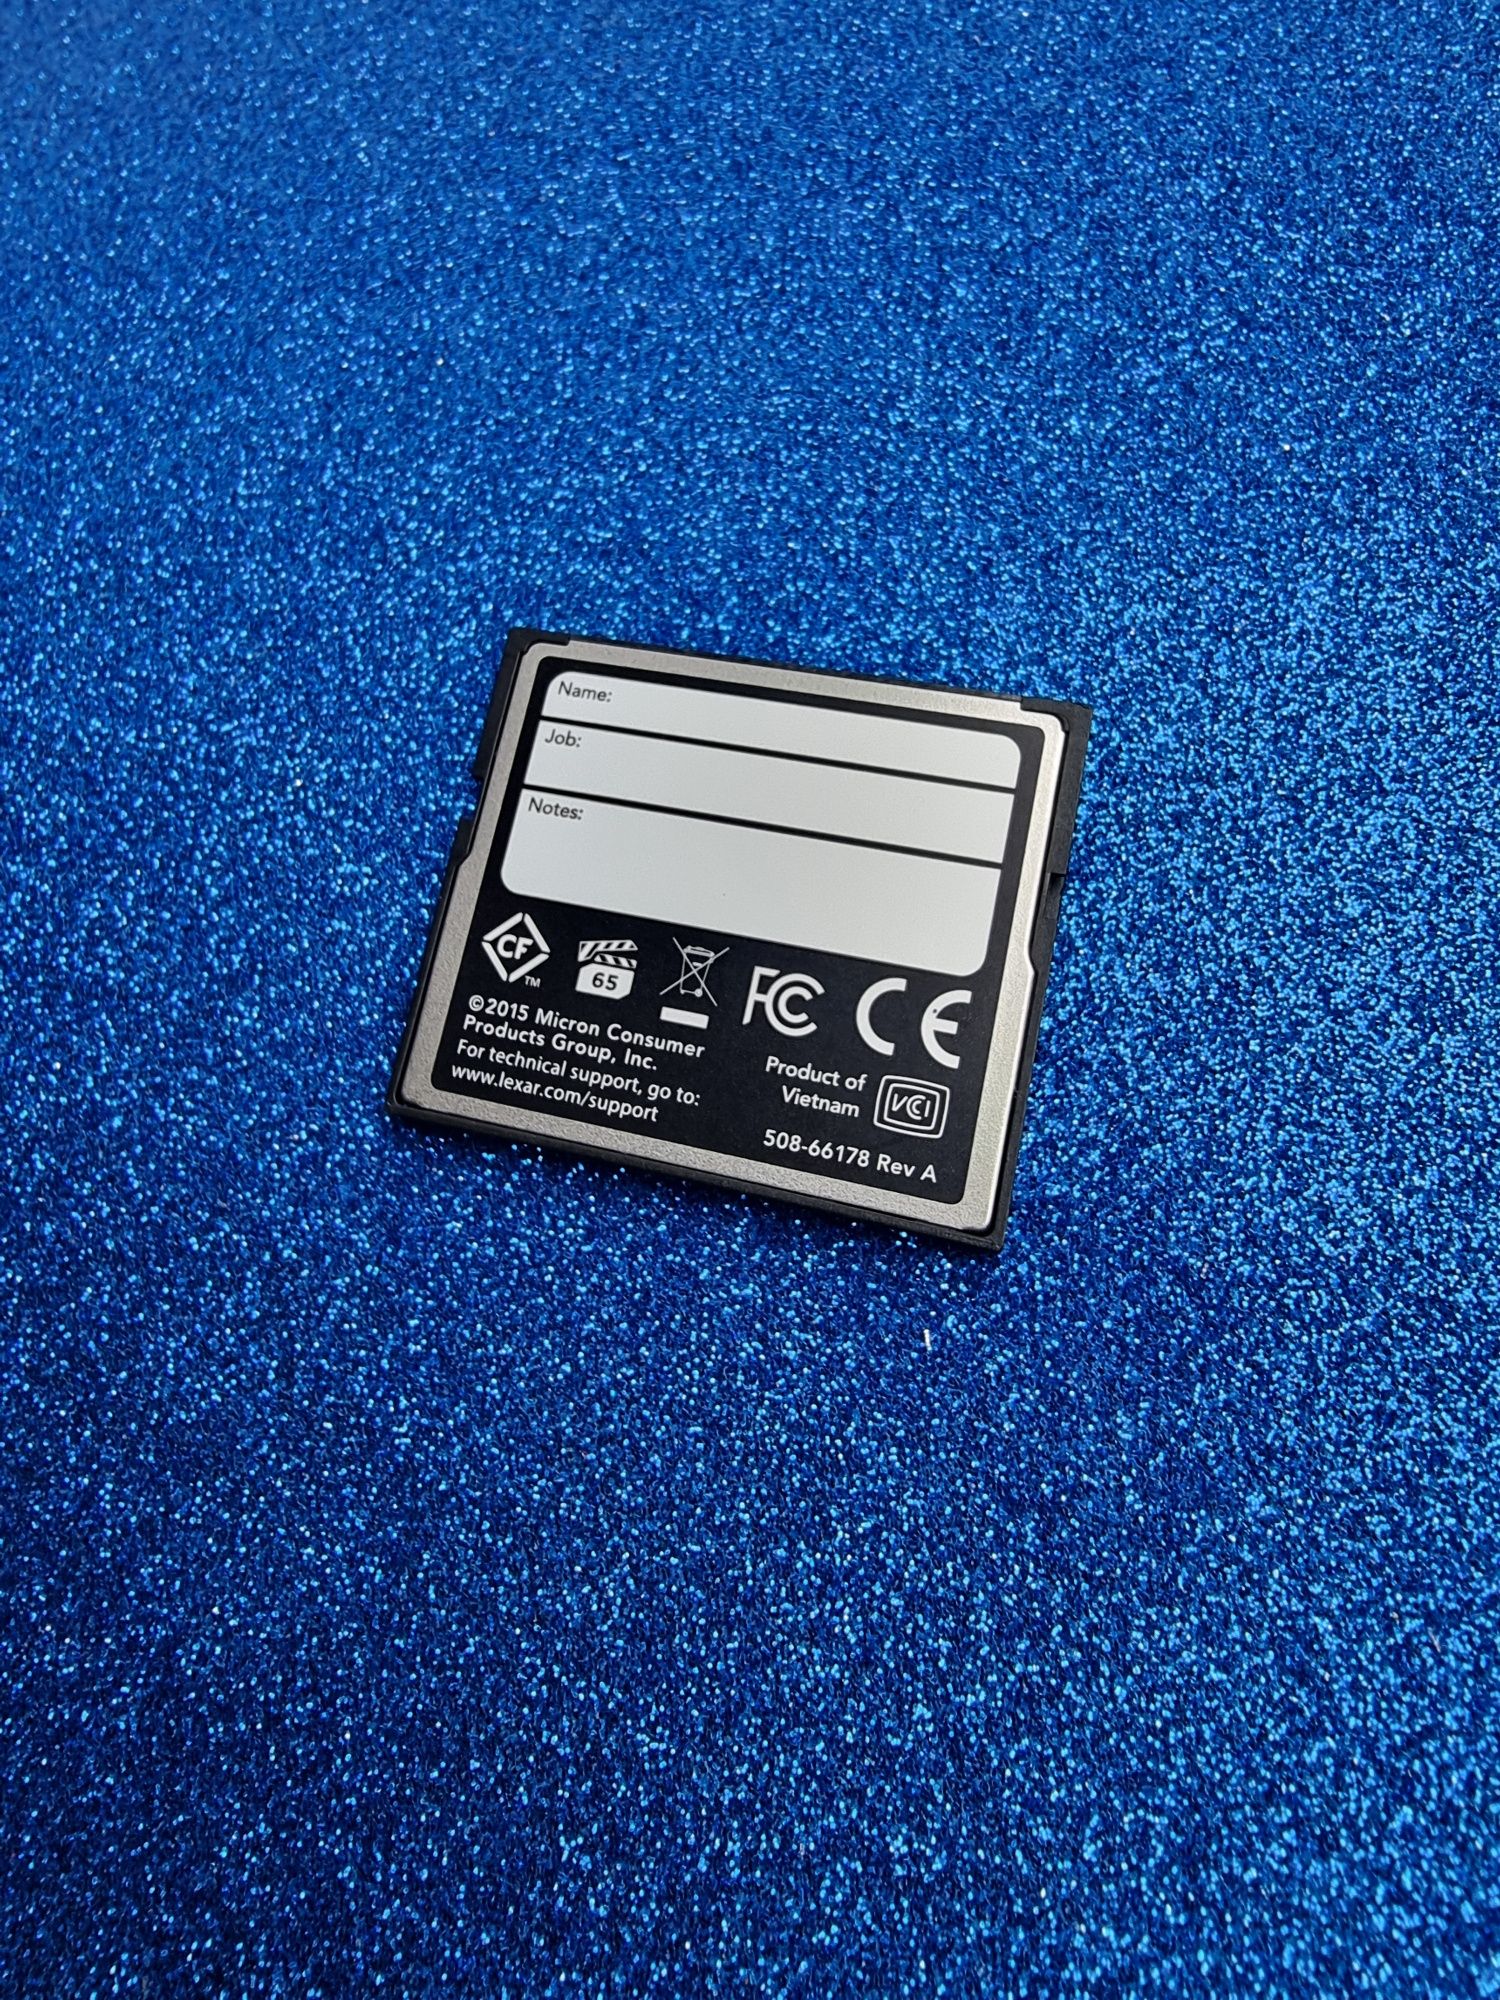 LEXAR 128GB Professional 1066x Compact Flash Memory Card 160 M